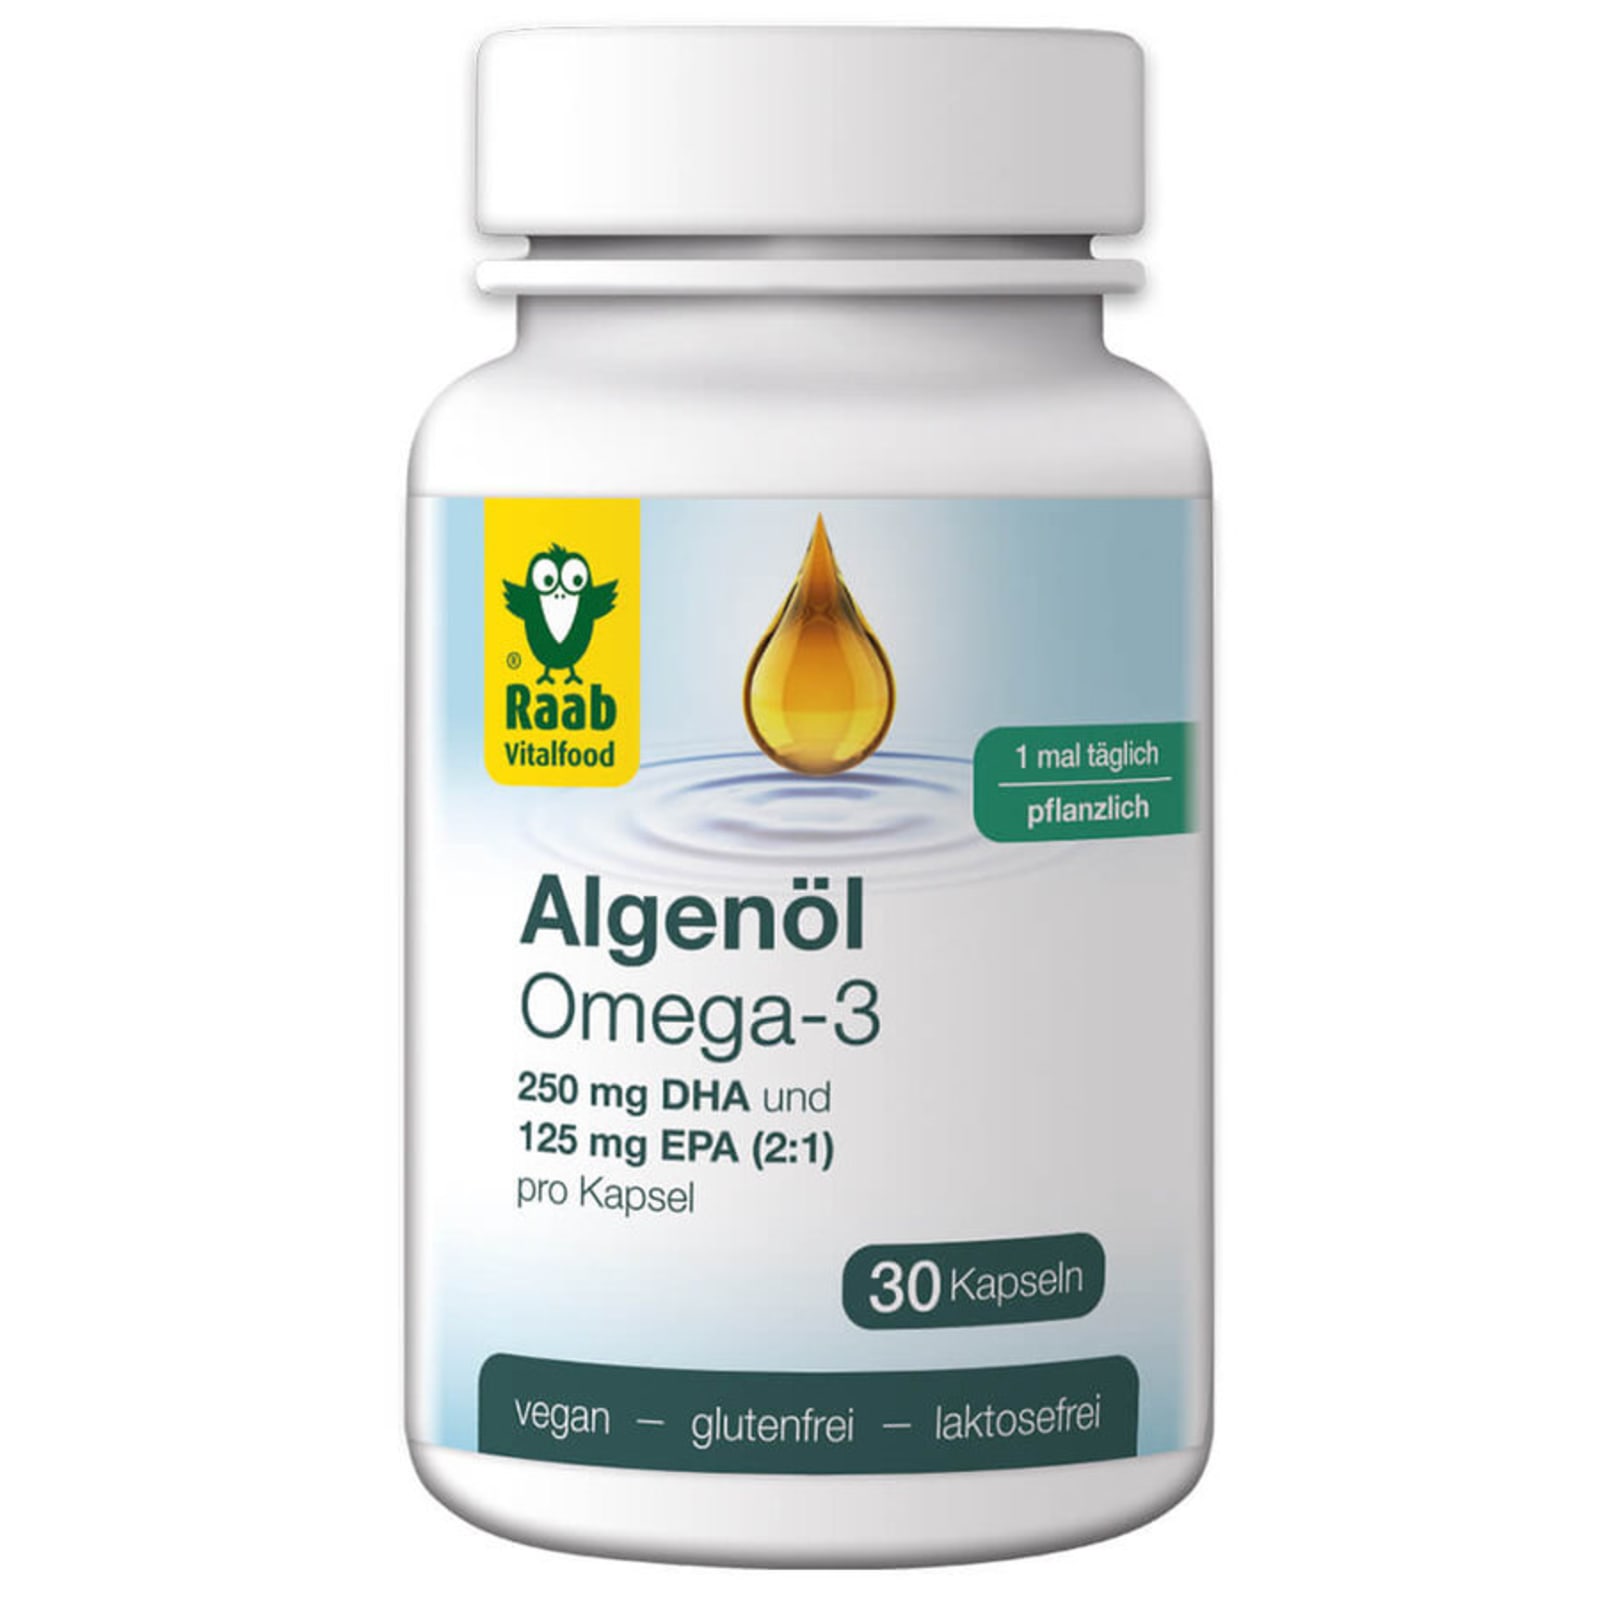 uitzondering huren Vijftig Algae Oil Omega-3 (30 capsules) van Raab Vitalfood kopen | Bodylab Shop